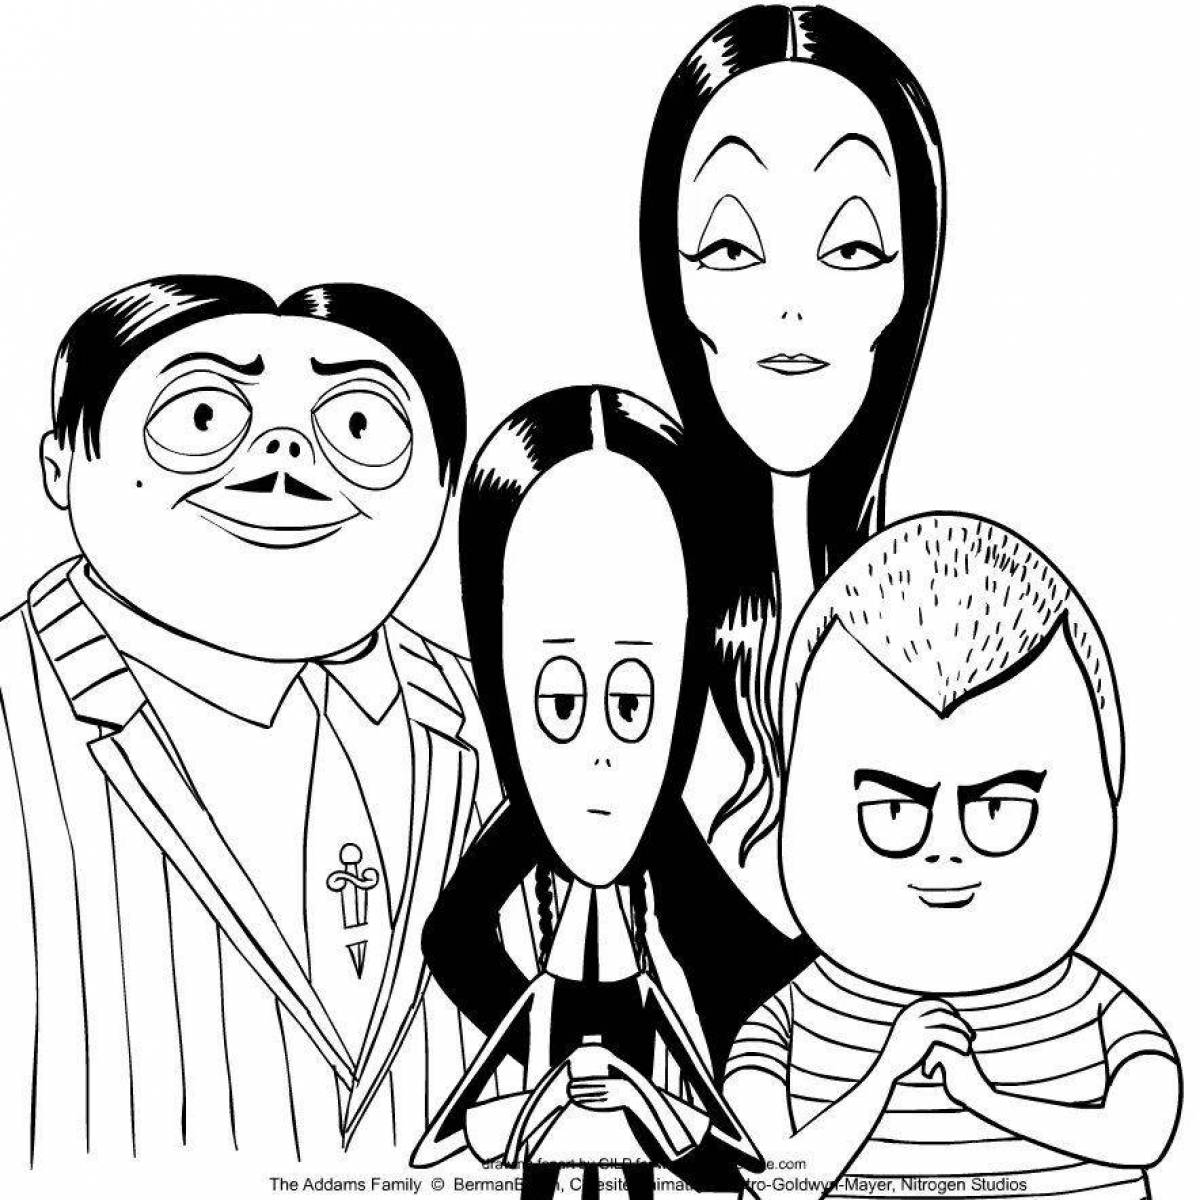 Addams family item #4